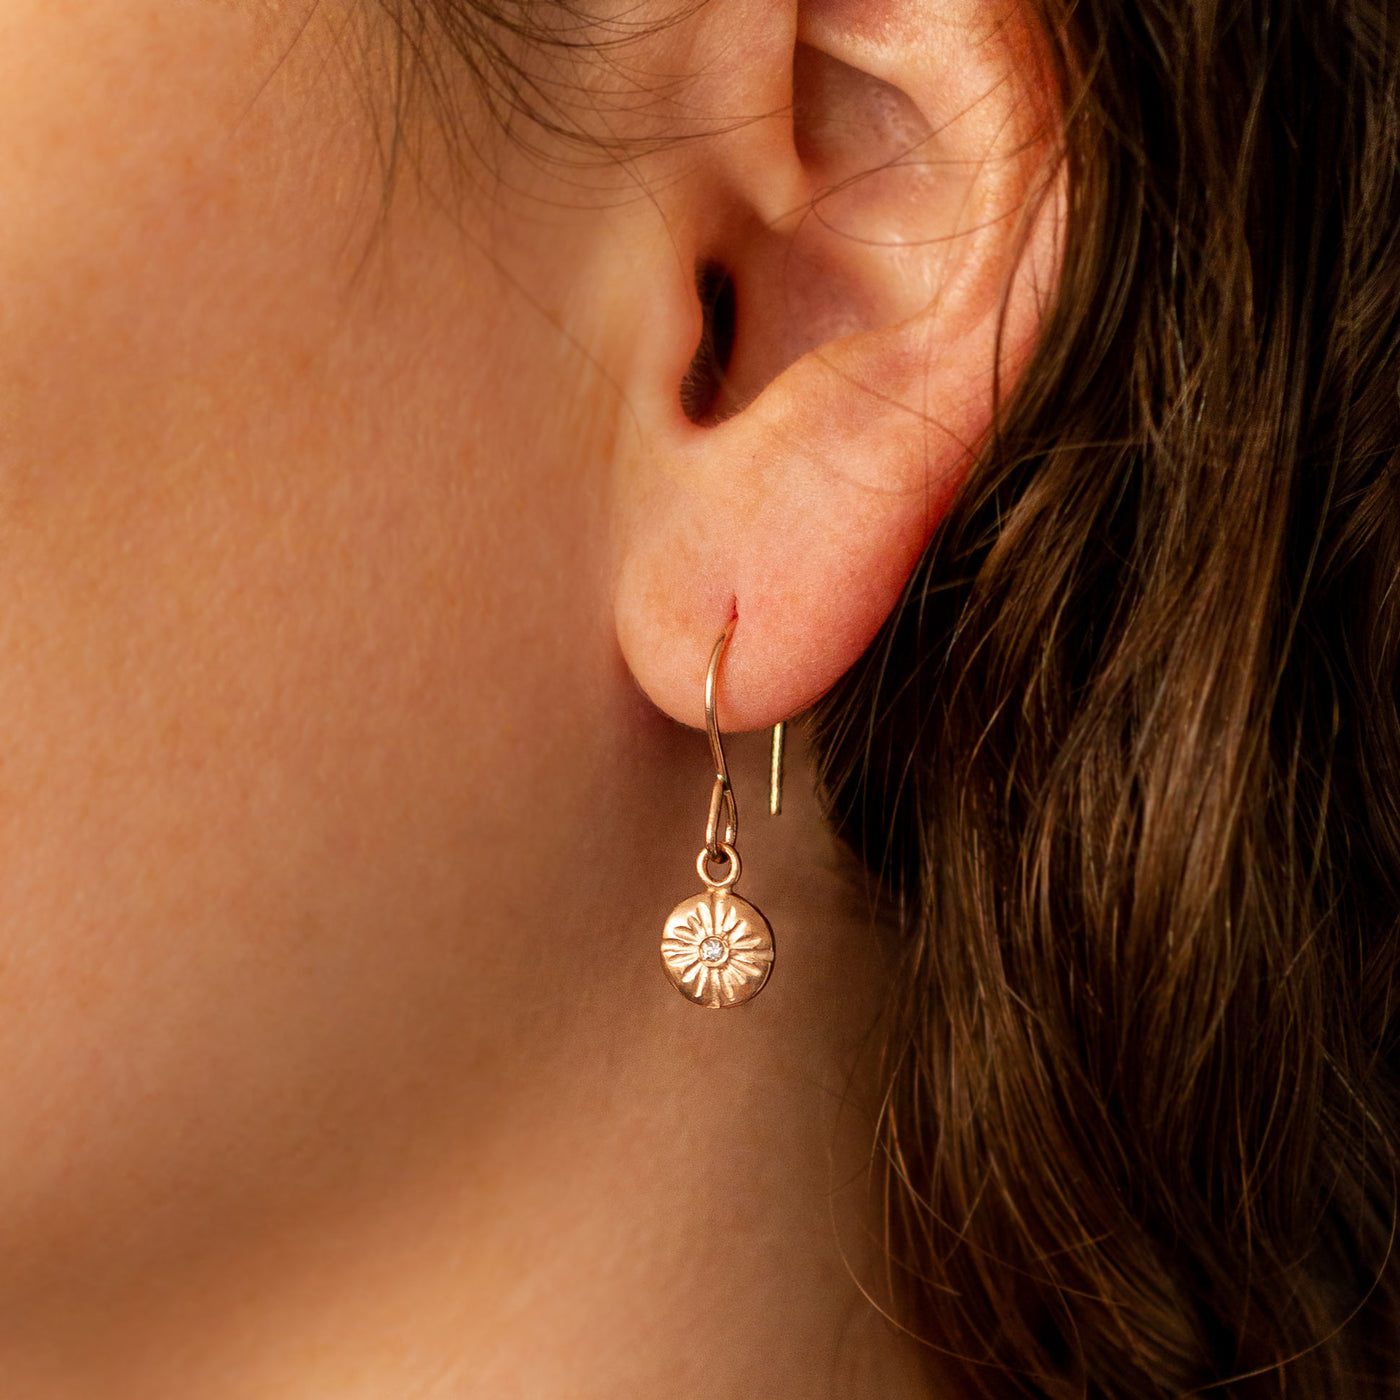 Rose Gold Sunburst Lucia Earrings with Diamonds on an ear